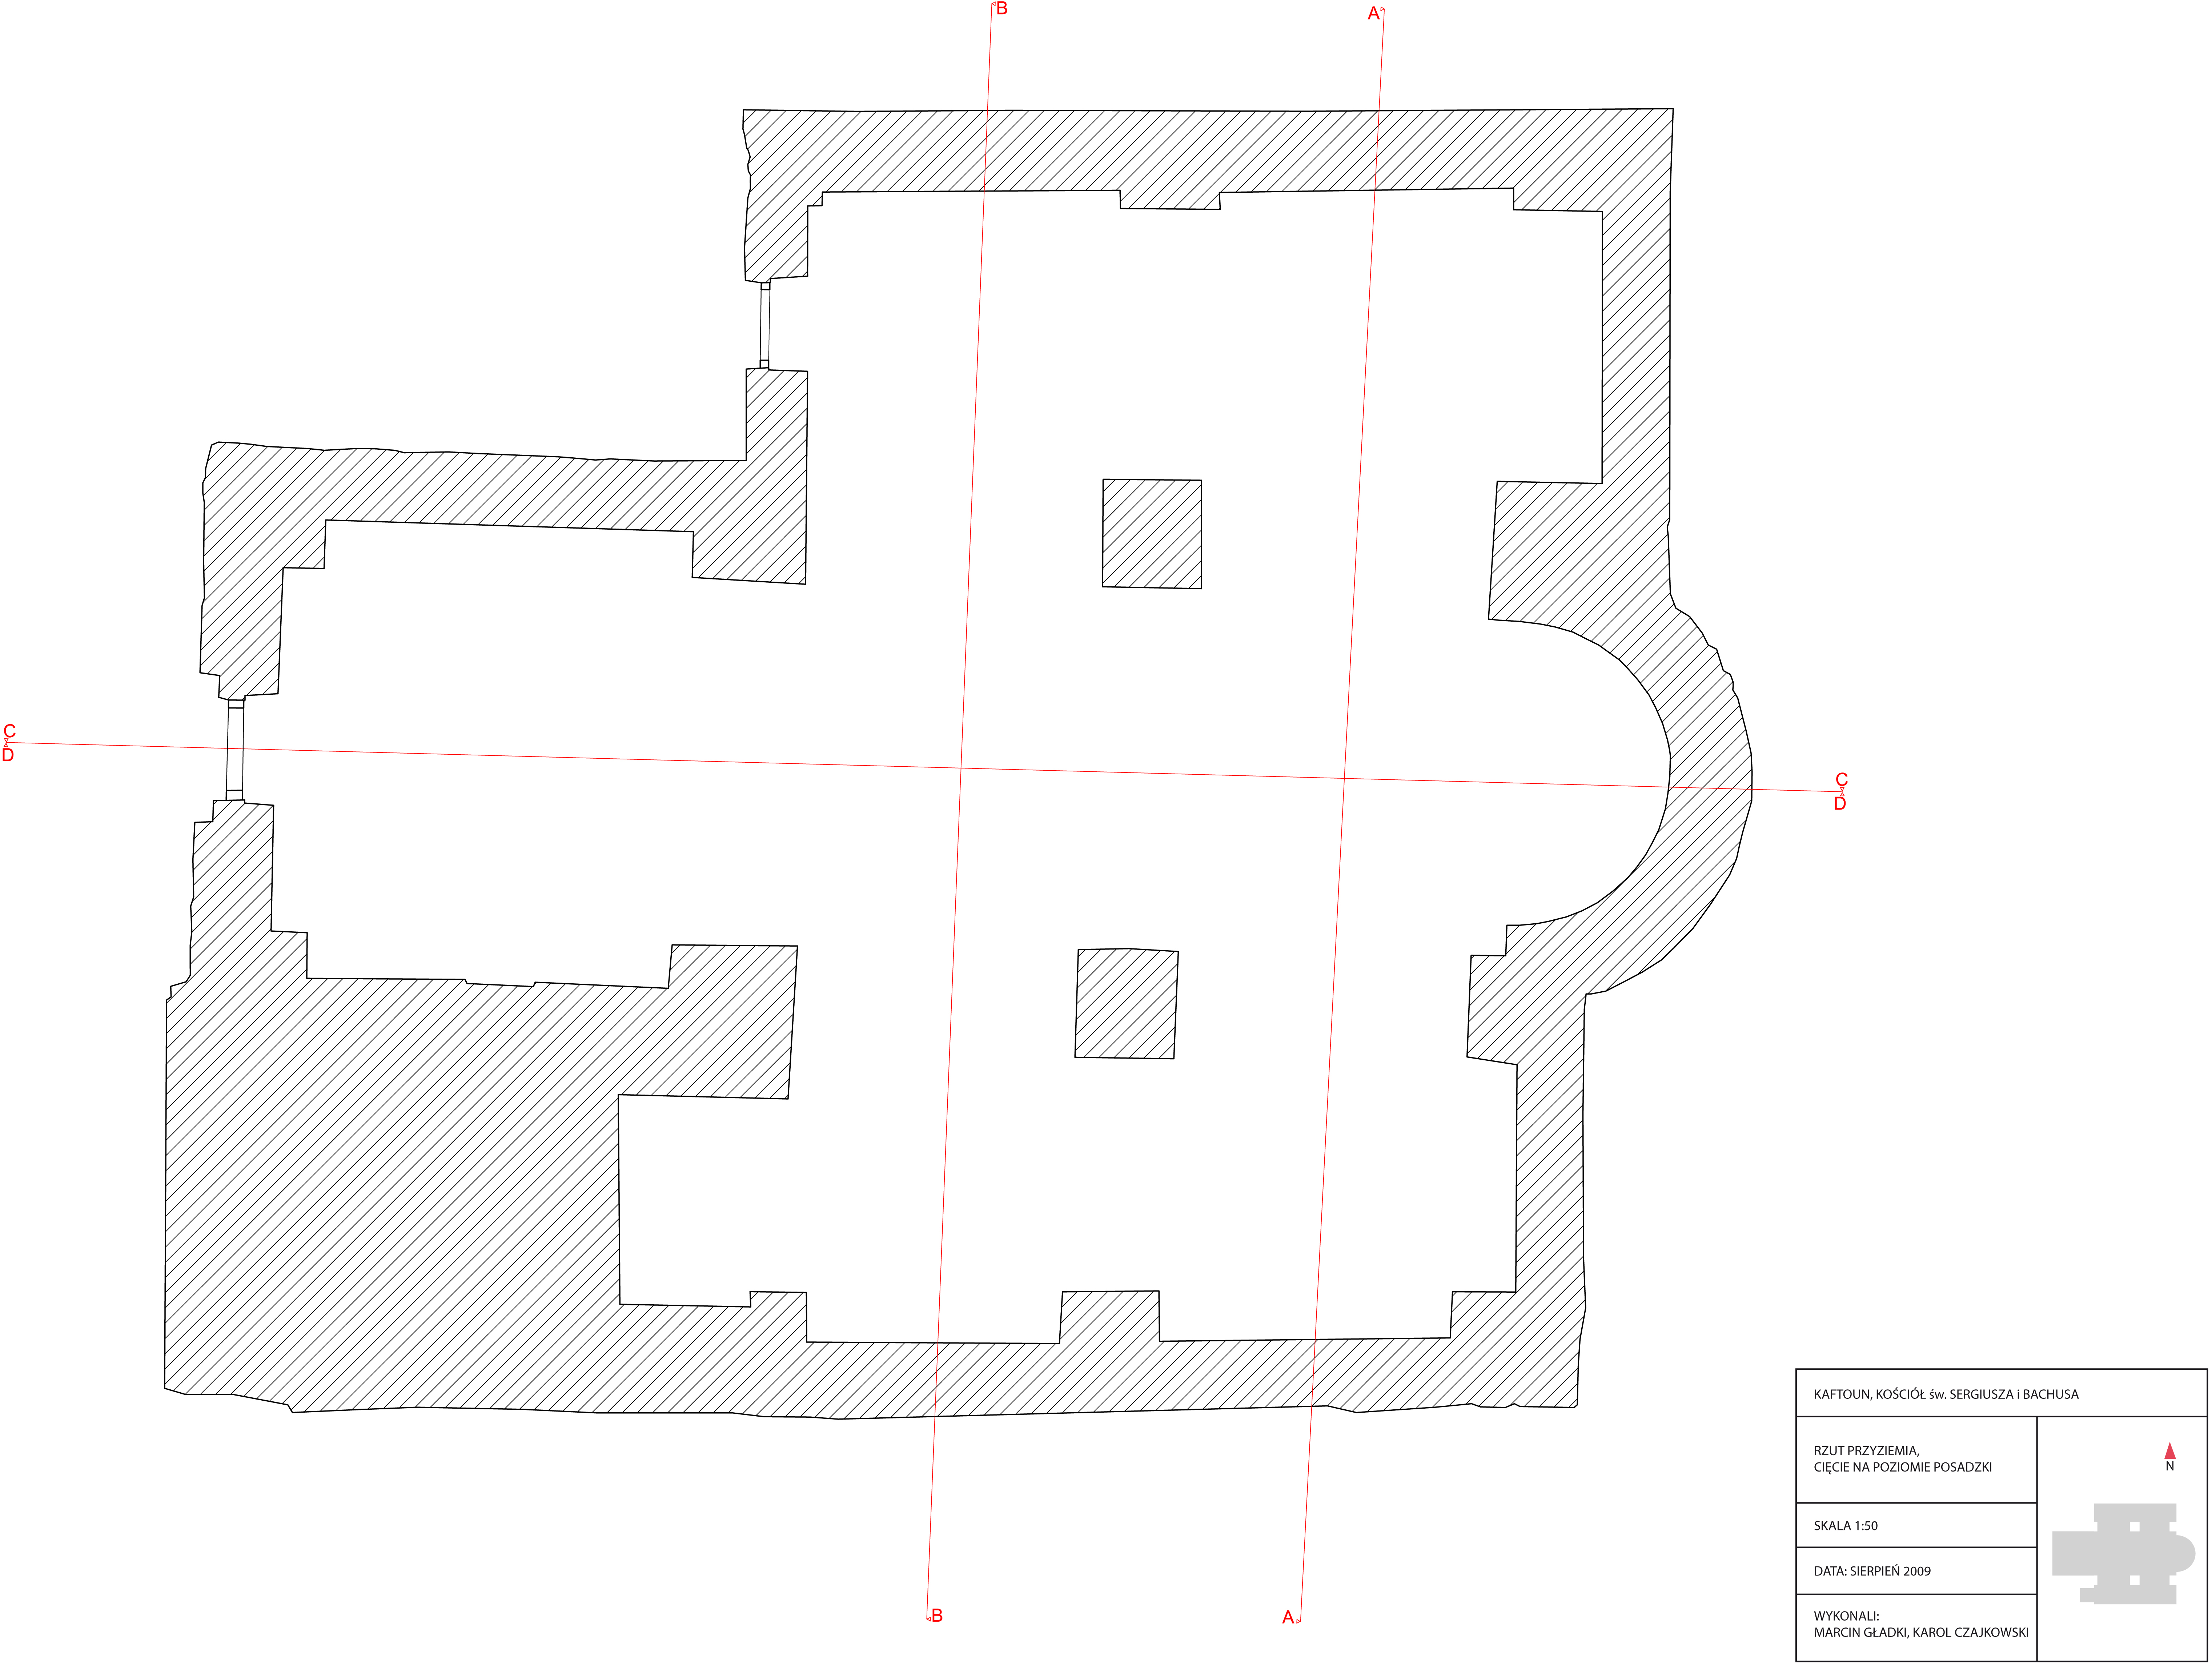 Fig. 8: Ground plan of the church with cross sections (Waliszewski and Chmielewski 2009–2010)